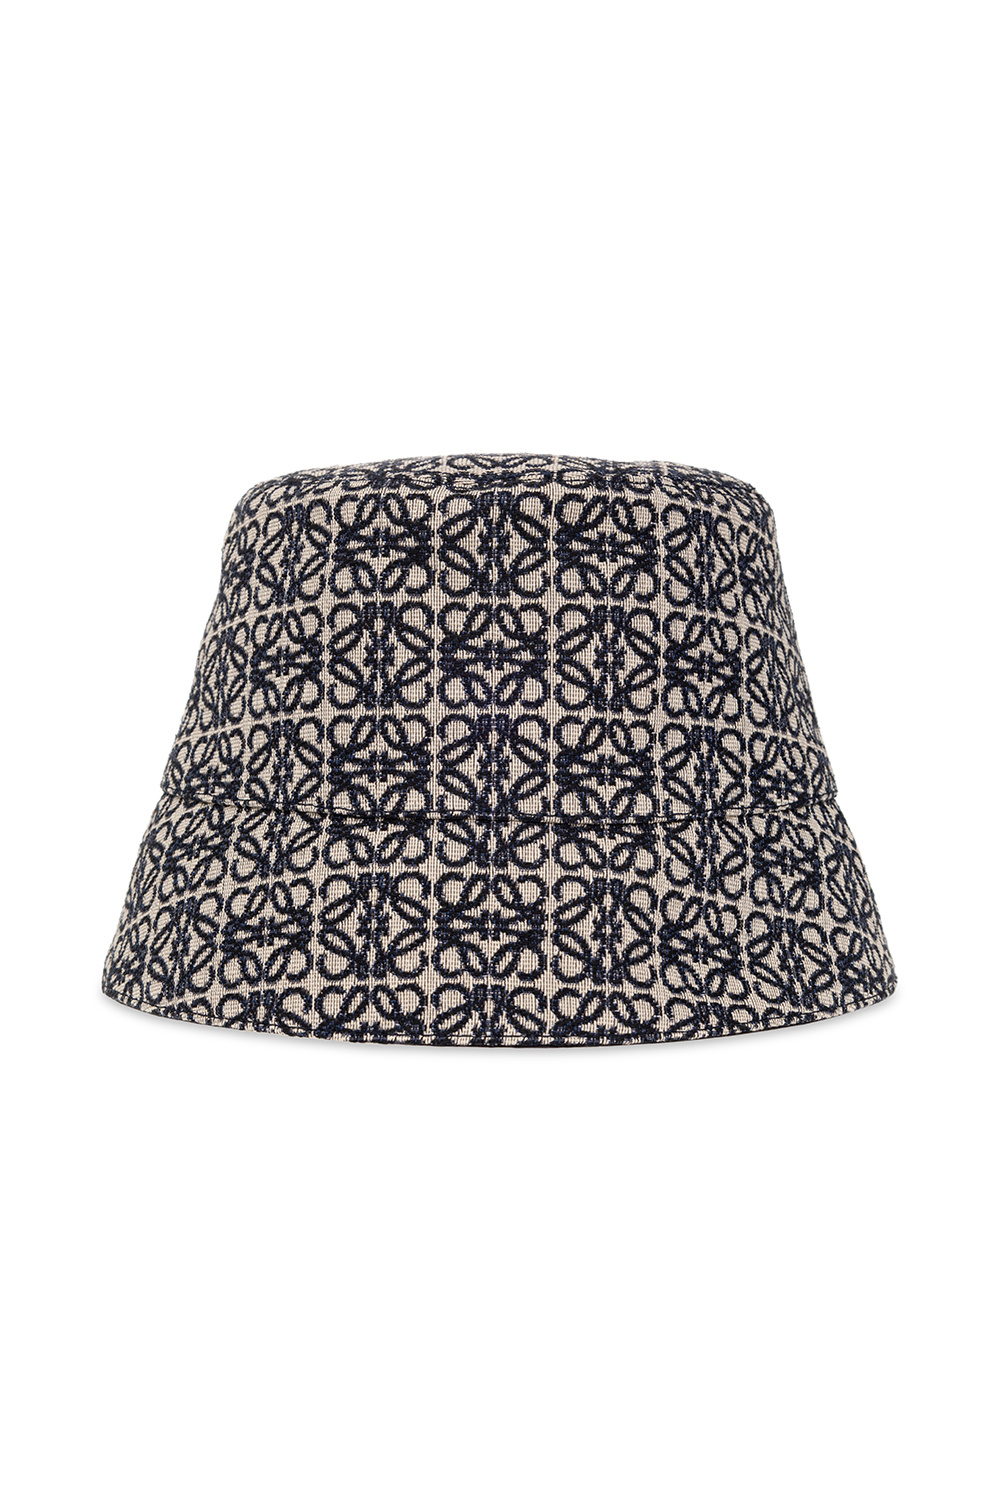 9 trendy bucket hats for spring and summer: Ralph Lauren, Stussy